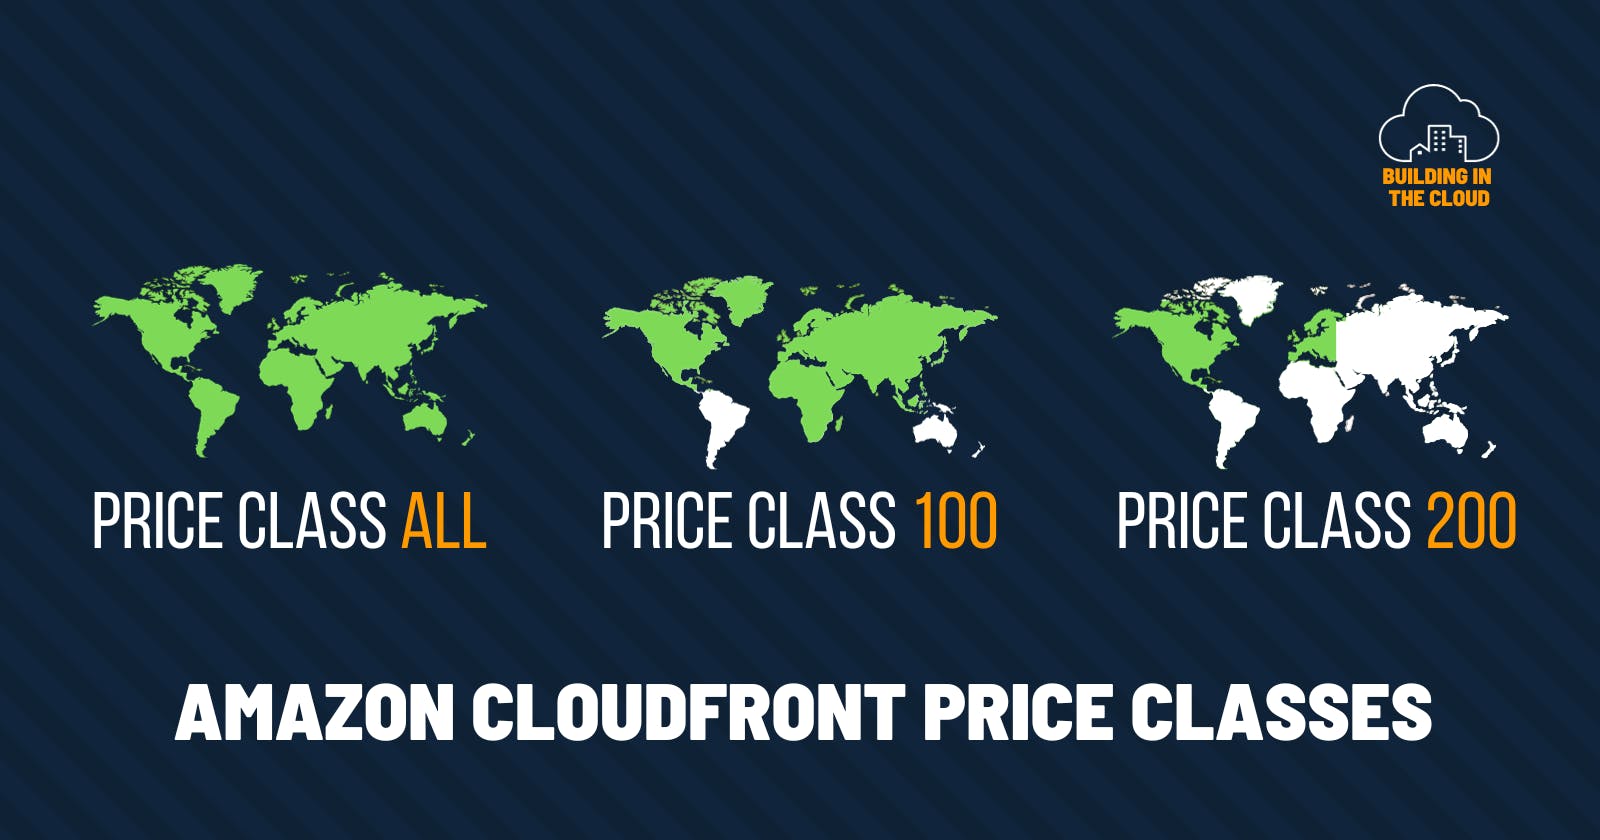 Amazon Cloudfront Price classes